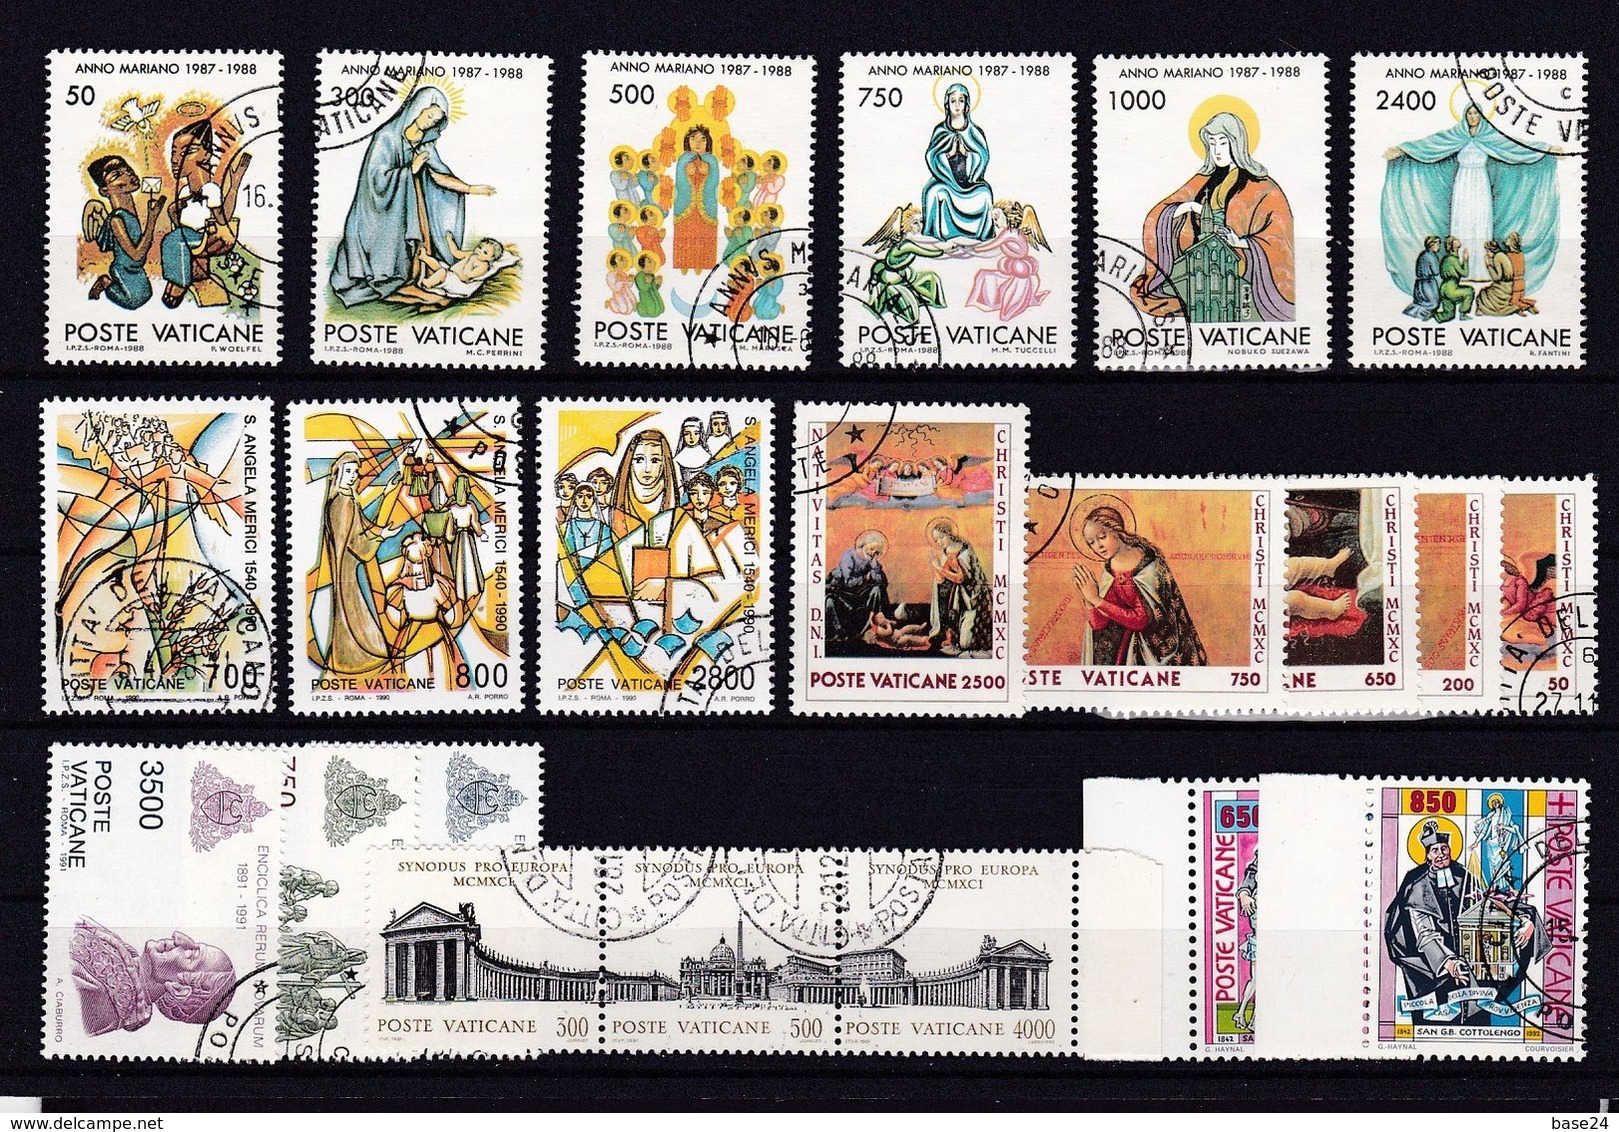 1988 1990 1991 1992 Vaticano Vatican 6 Serie Usate: ANNO MARIANO, S.A. MERICI, NATALE, RERUM NOVARUM, SINODO, S. COTT... - Used Stamps